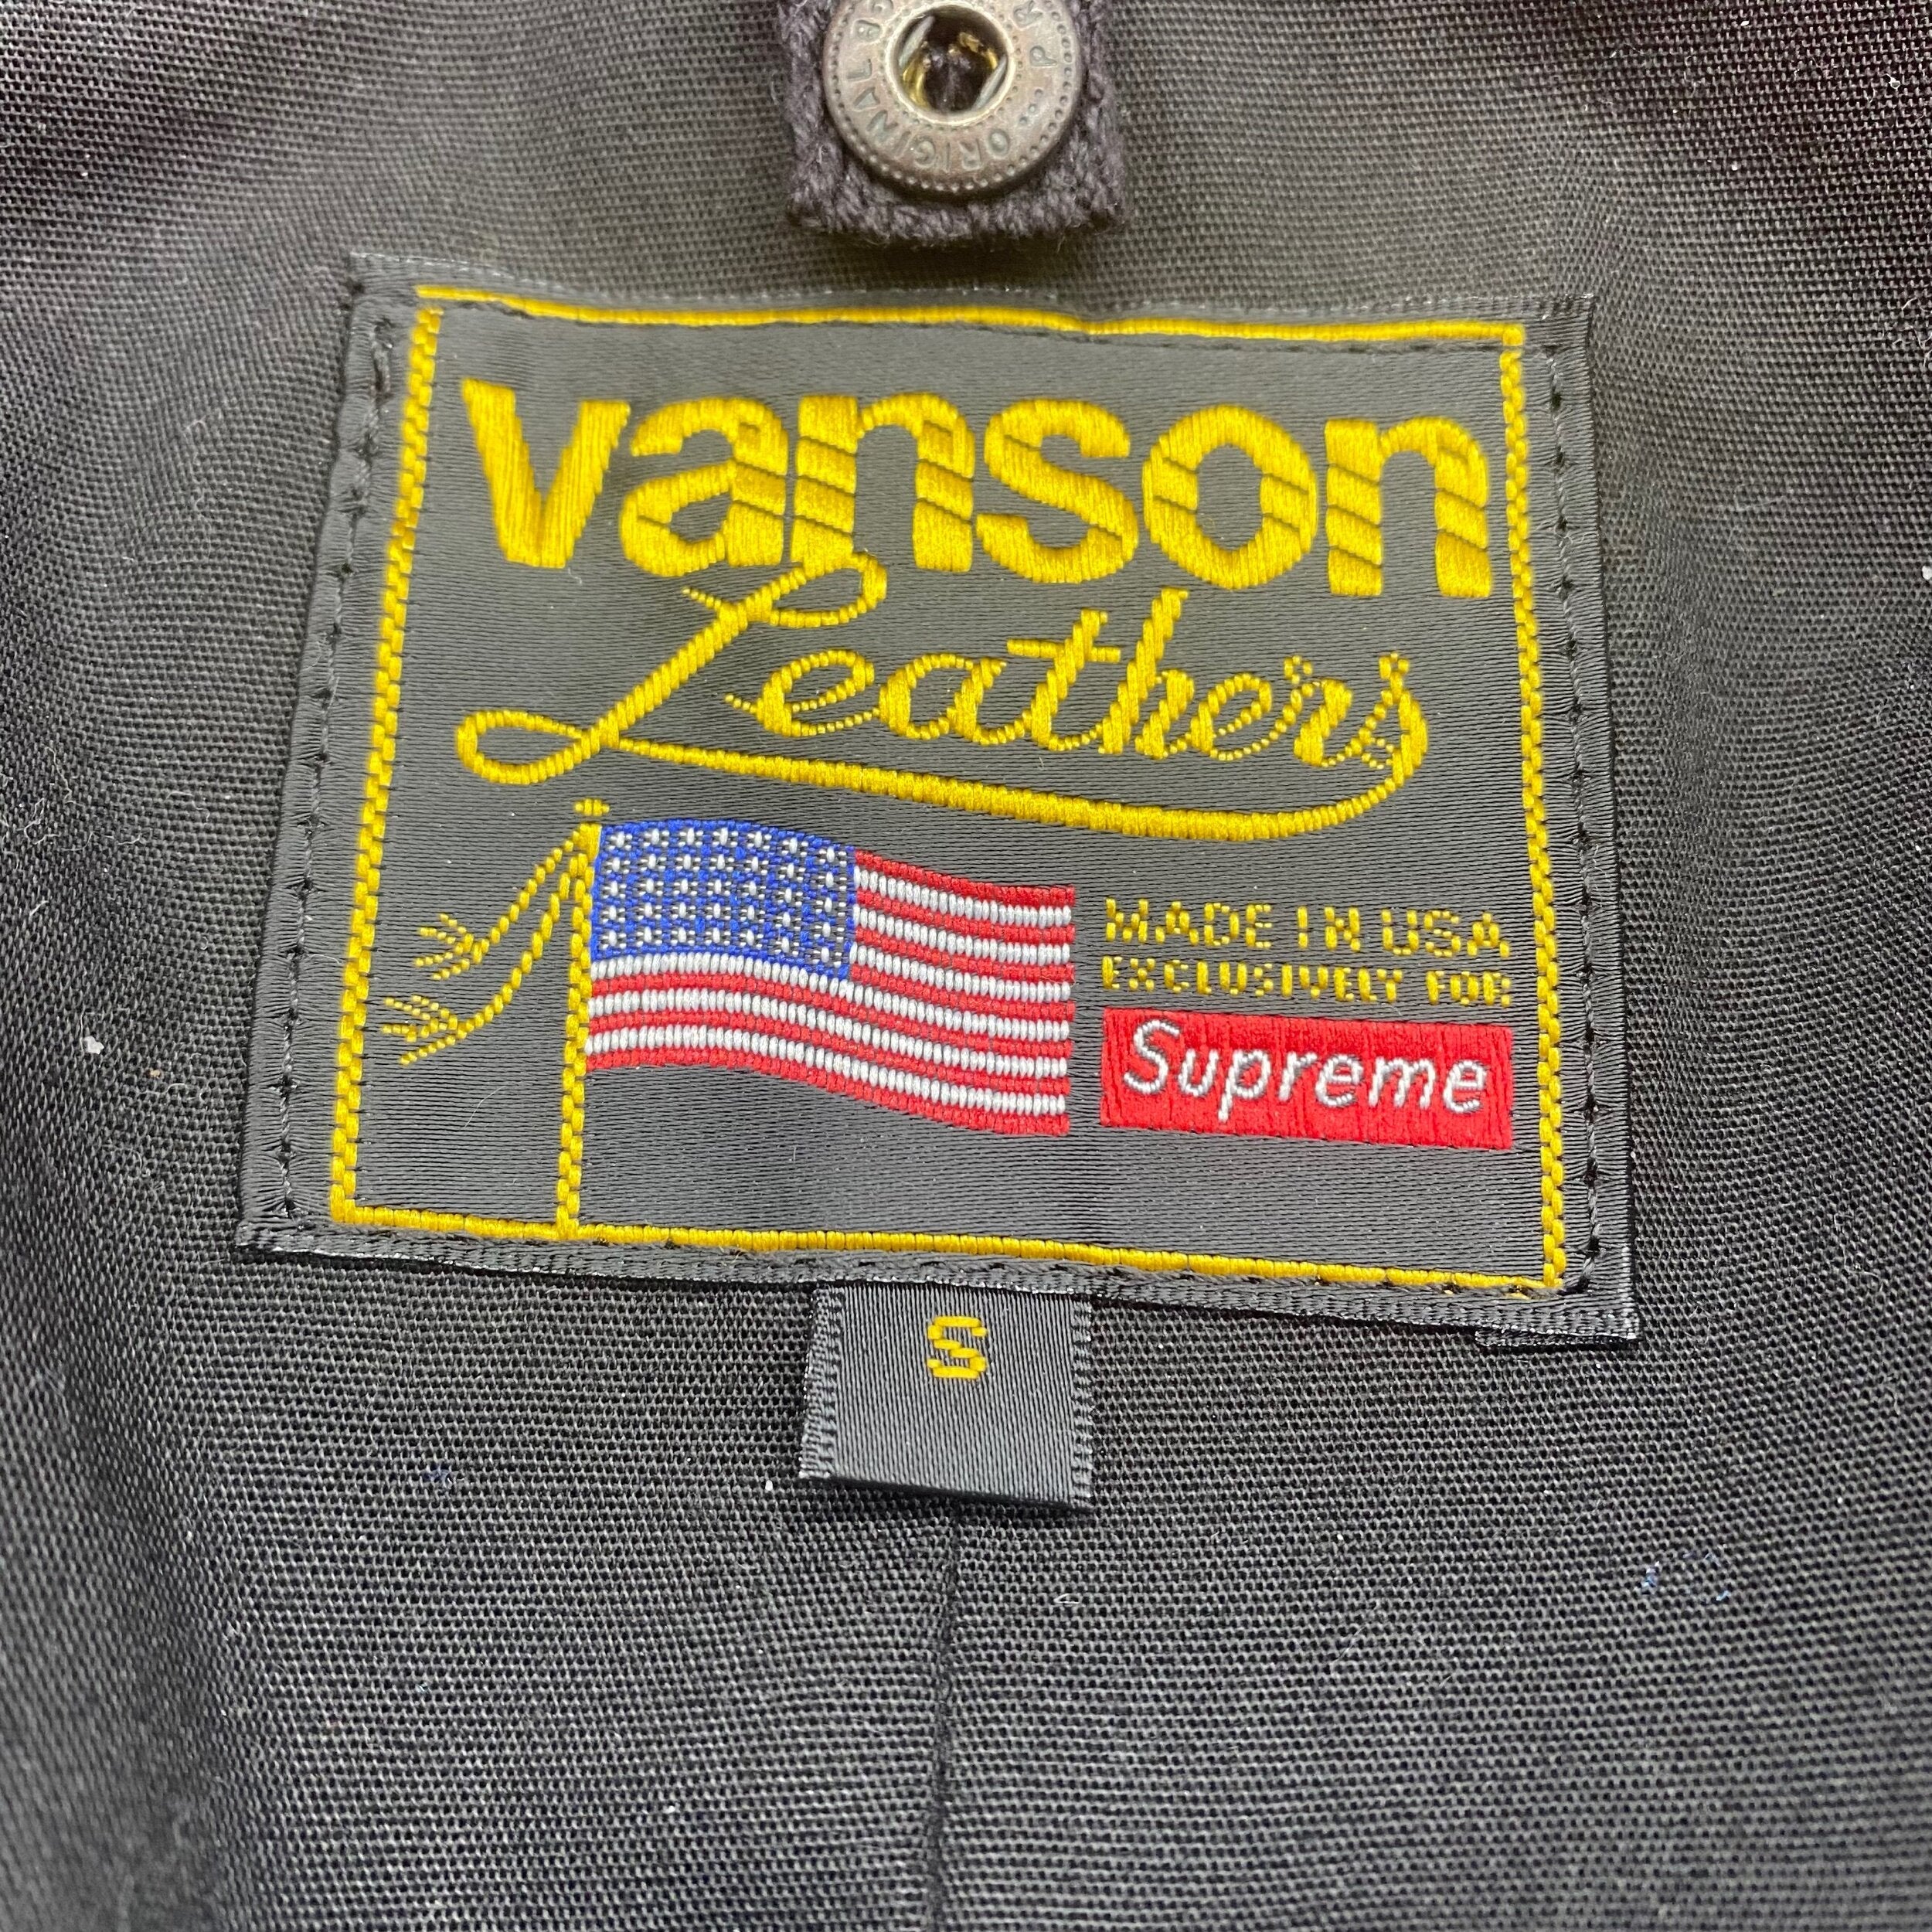 Size S) Supreme Vanson Bones Leather Jacket, Fall Winter 2017, 100%  Authentic! | eBay